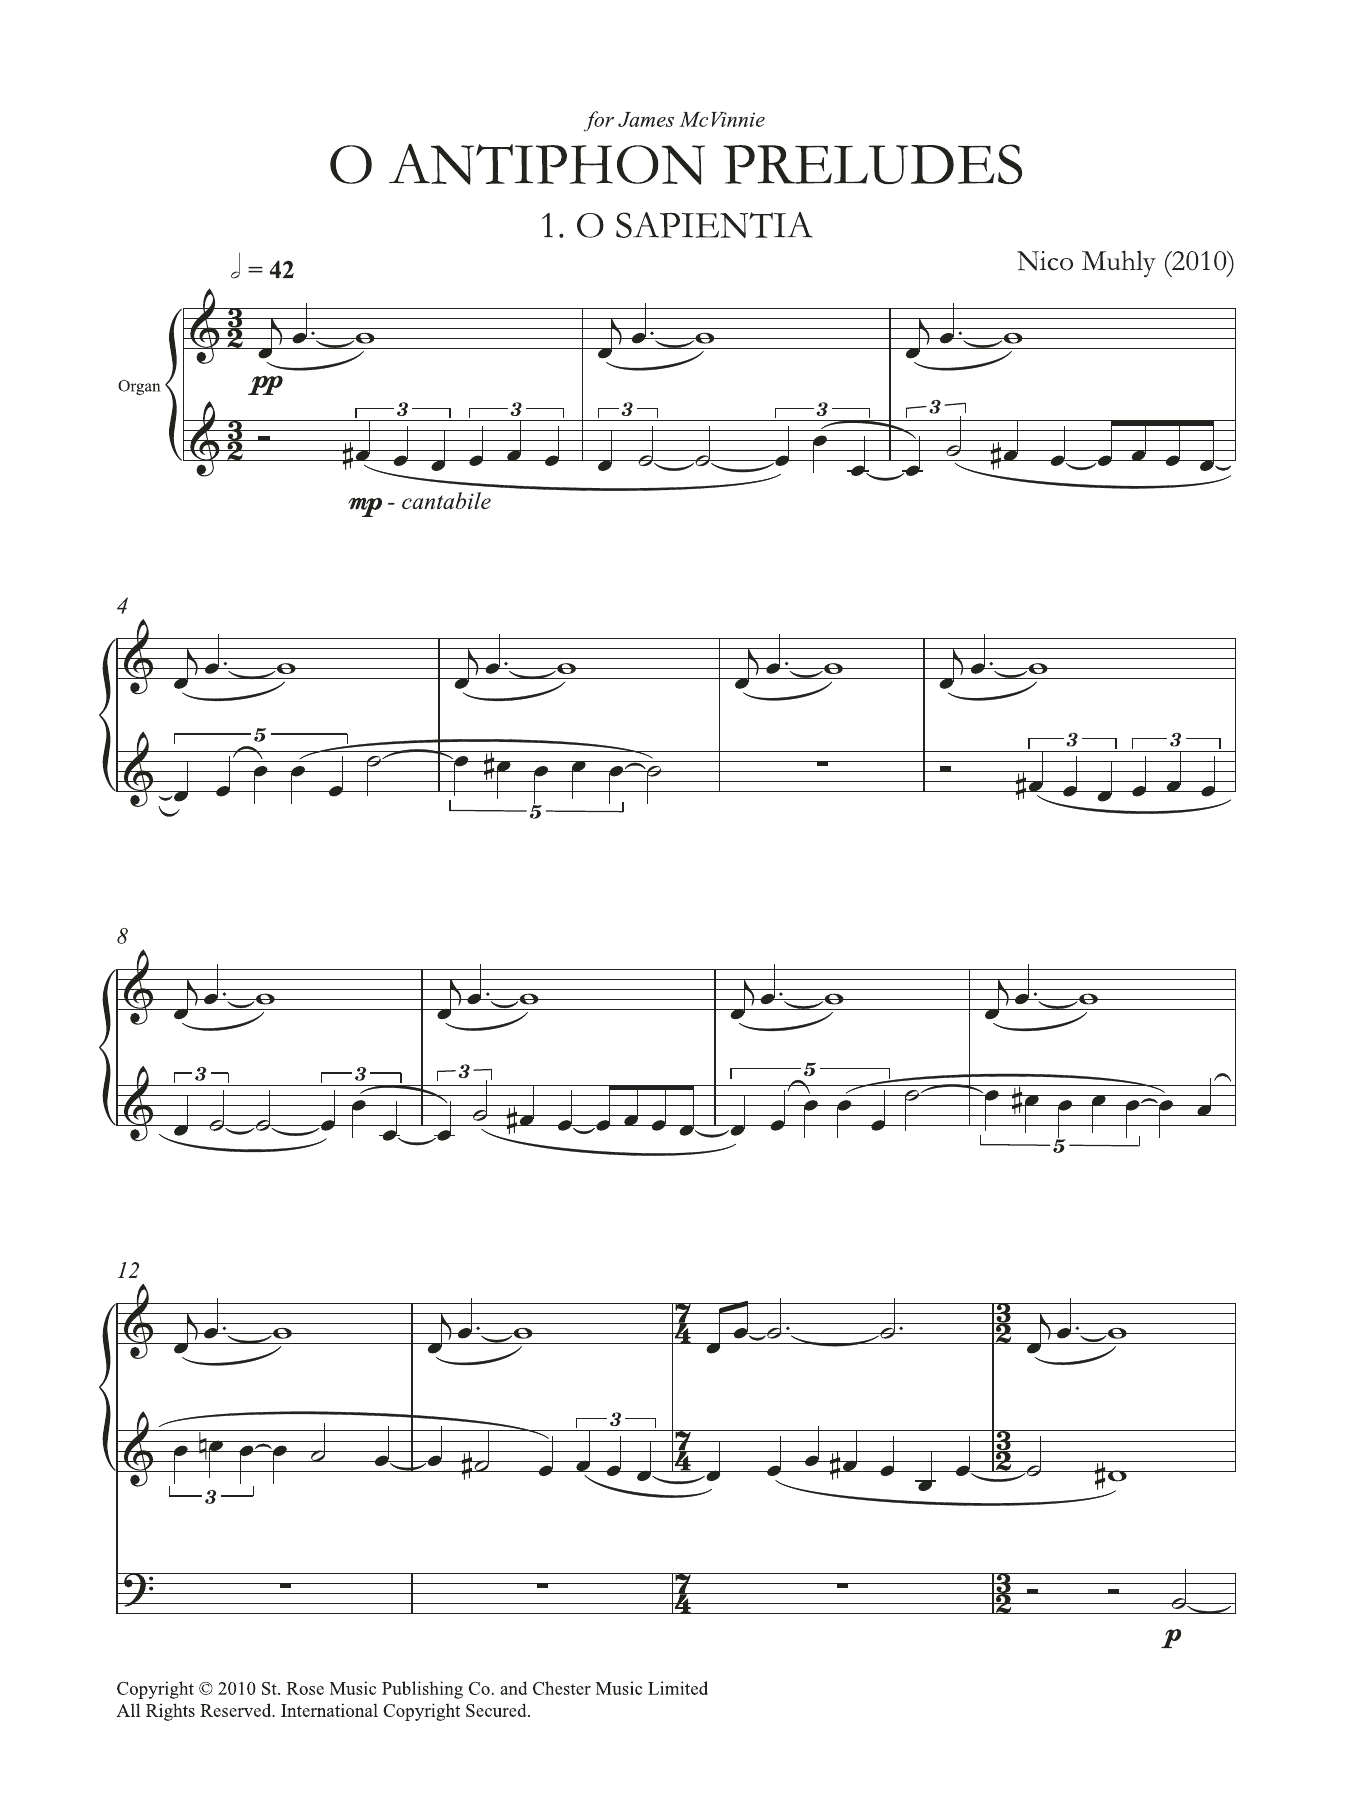 Nico Muhly O Antiphon Preludes Sheet Music Notes & Chords for Organ - Download or Print PDF